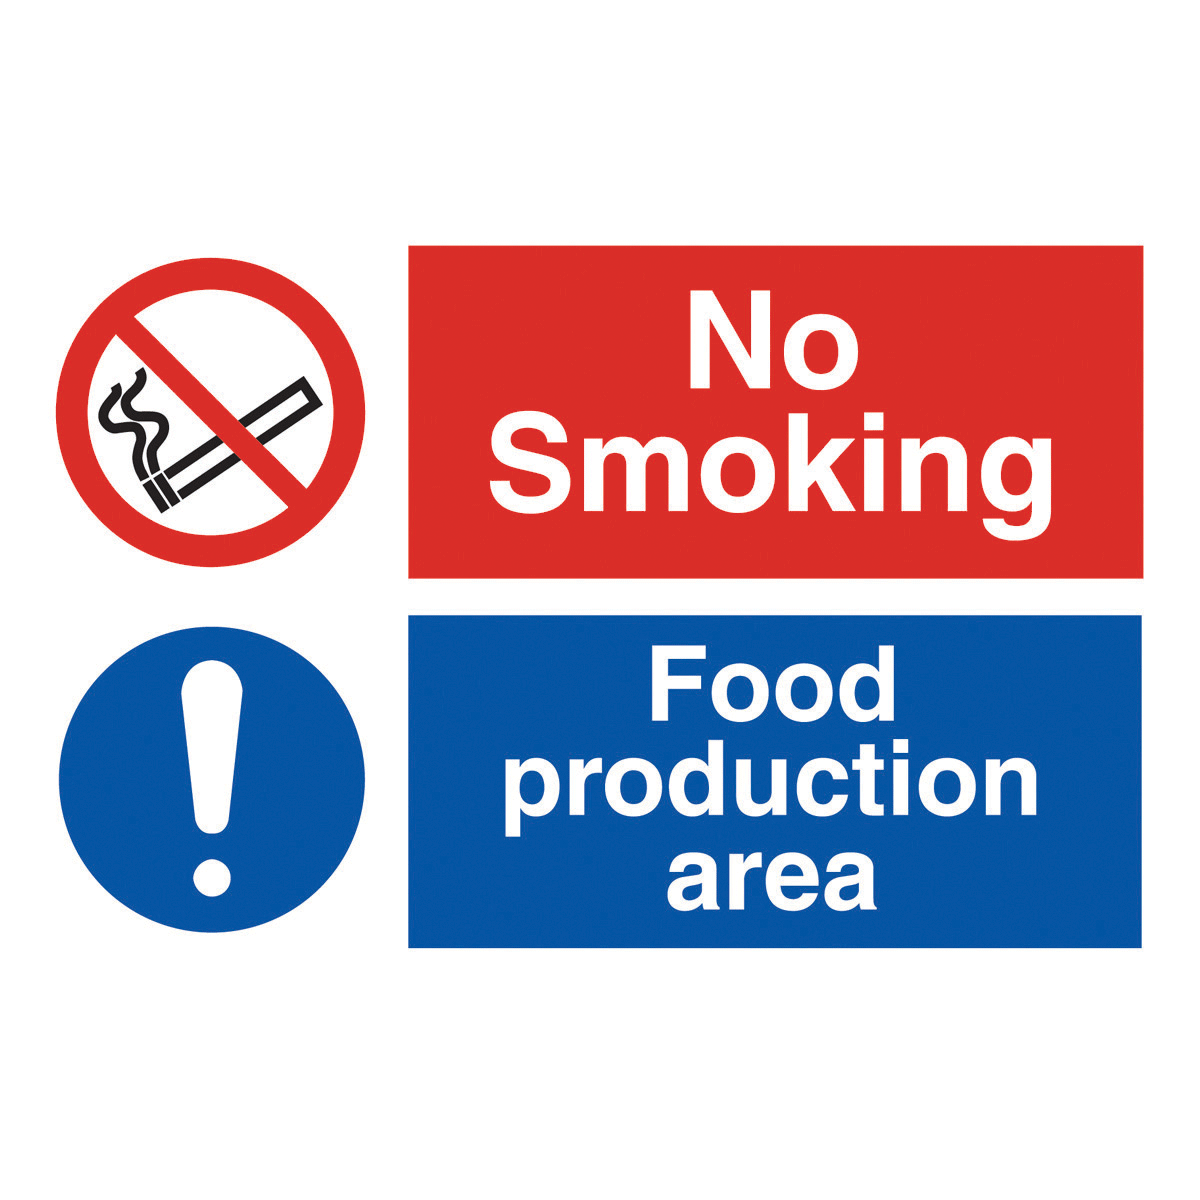 No Smoking Food Preparation Area safety sign